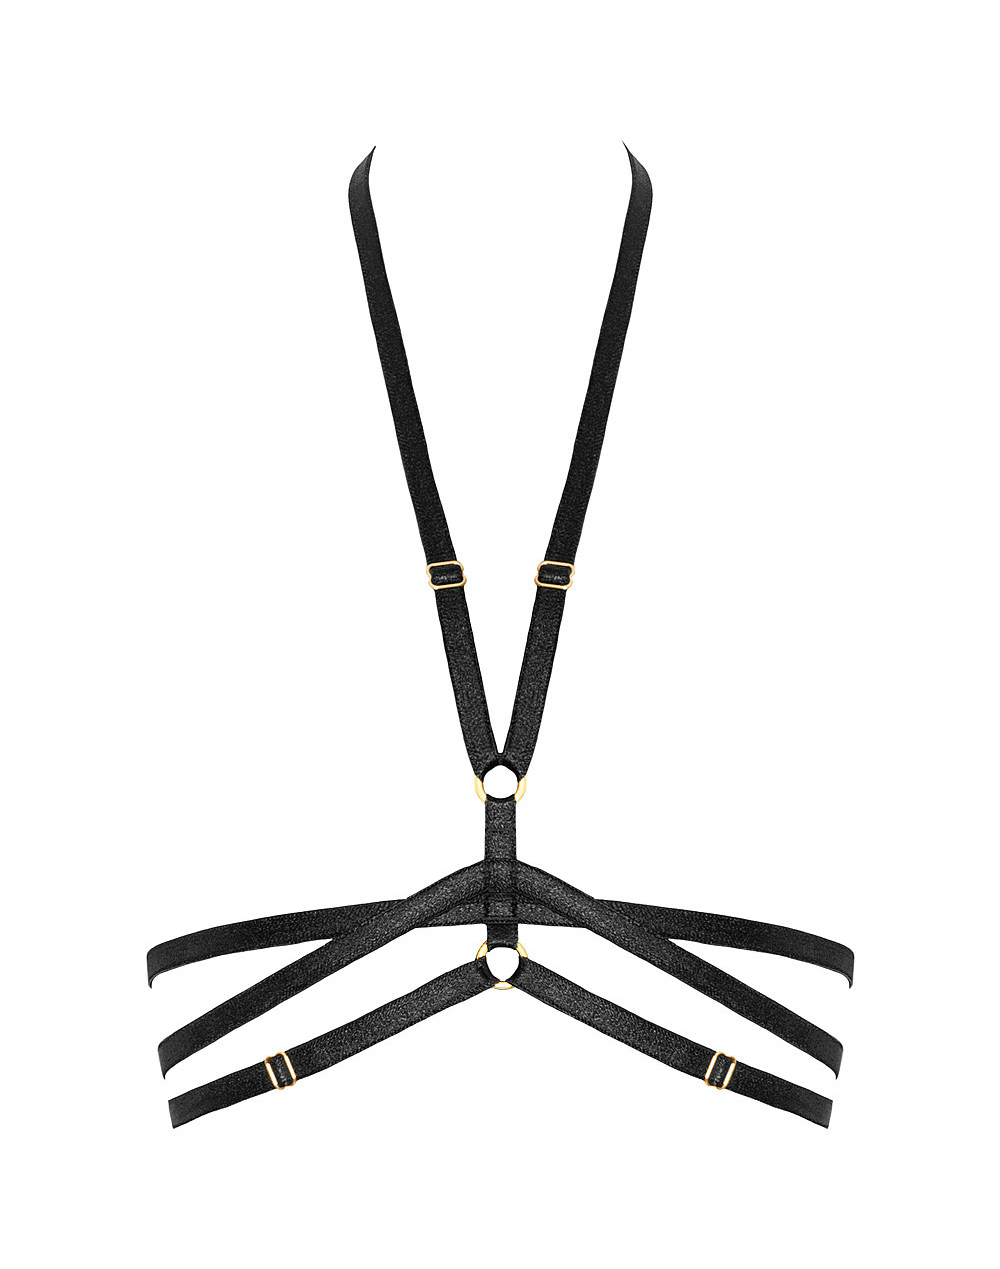 Lidia harness от Karolina Laskowska Цена — £45 (примерно 3 990 руб.)